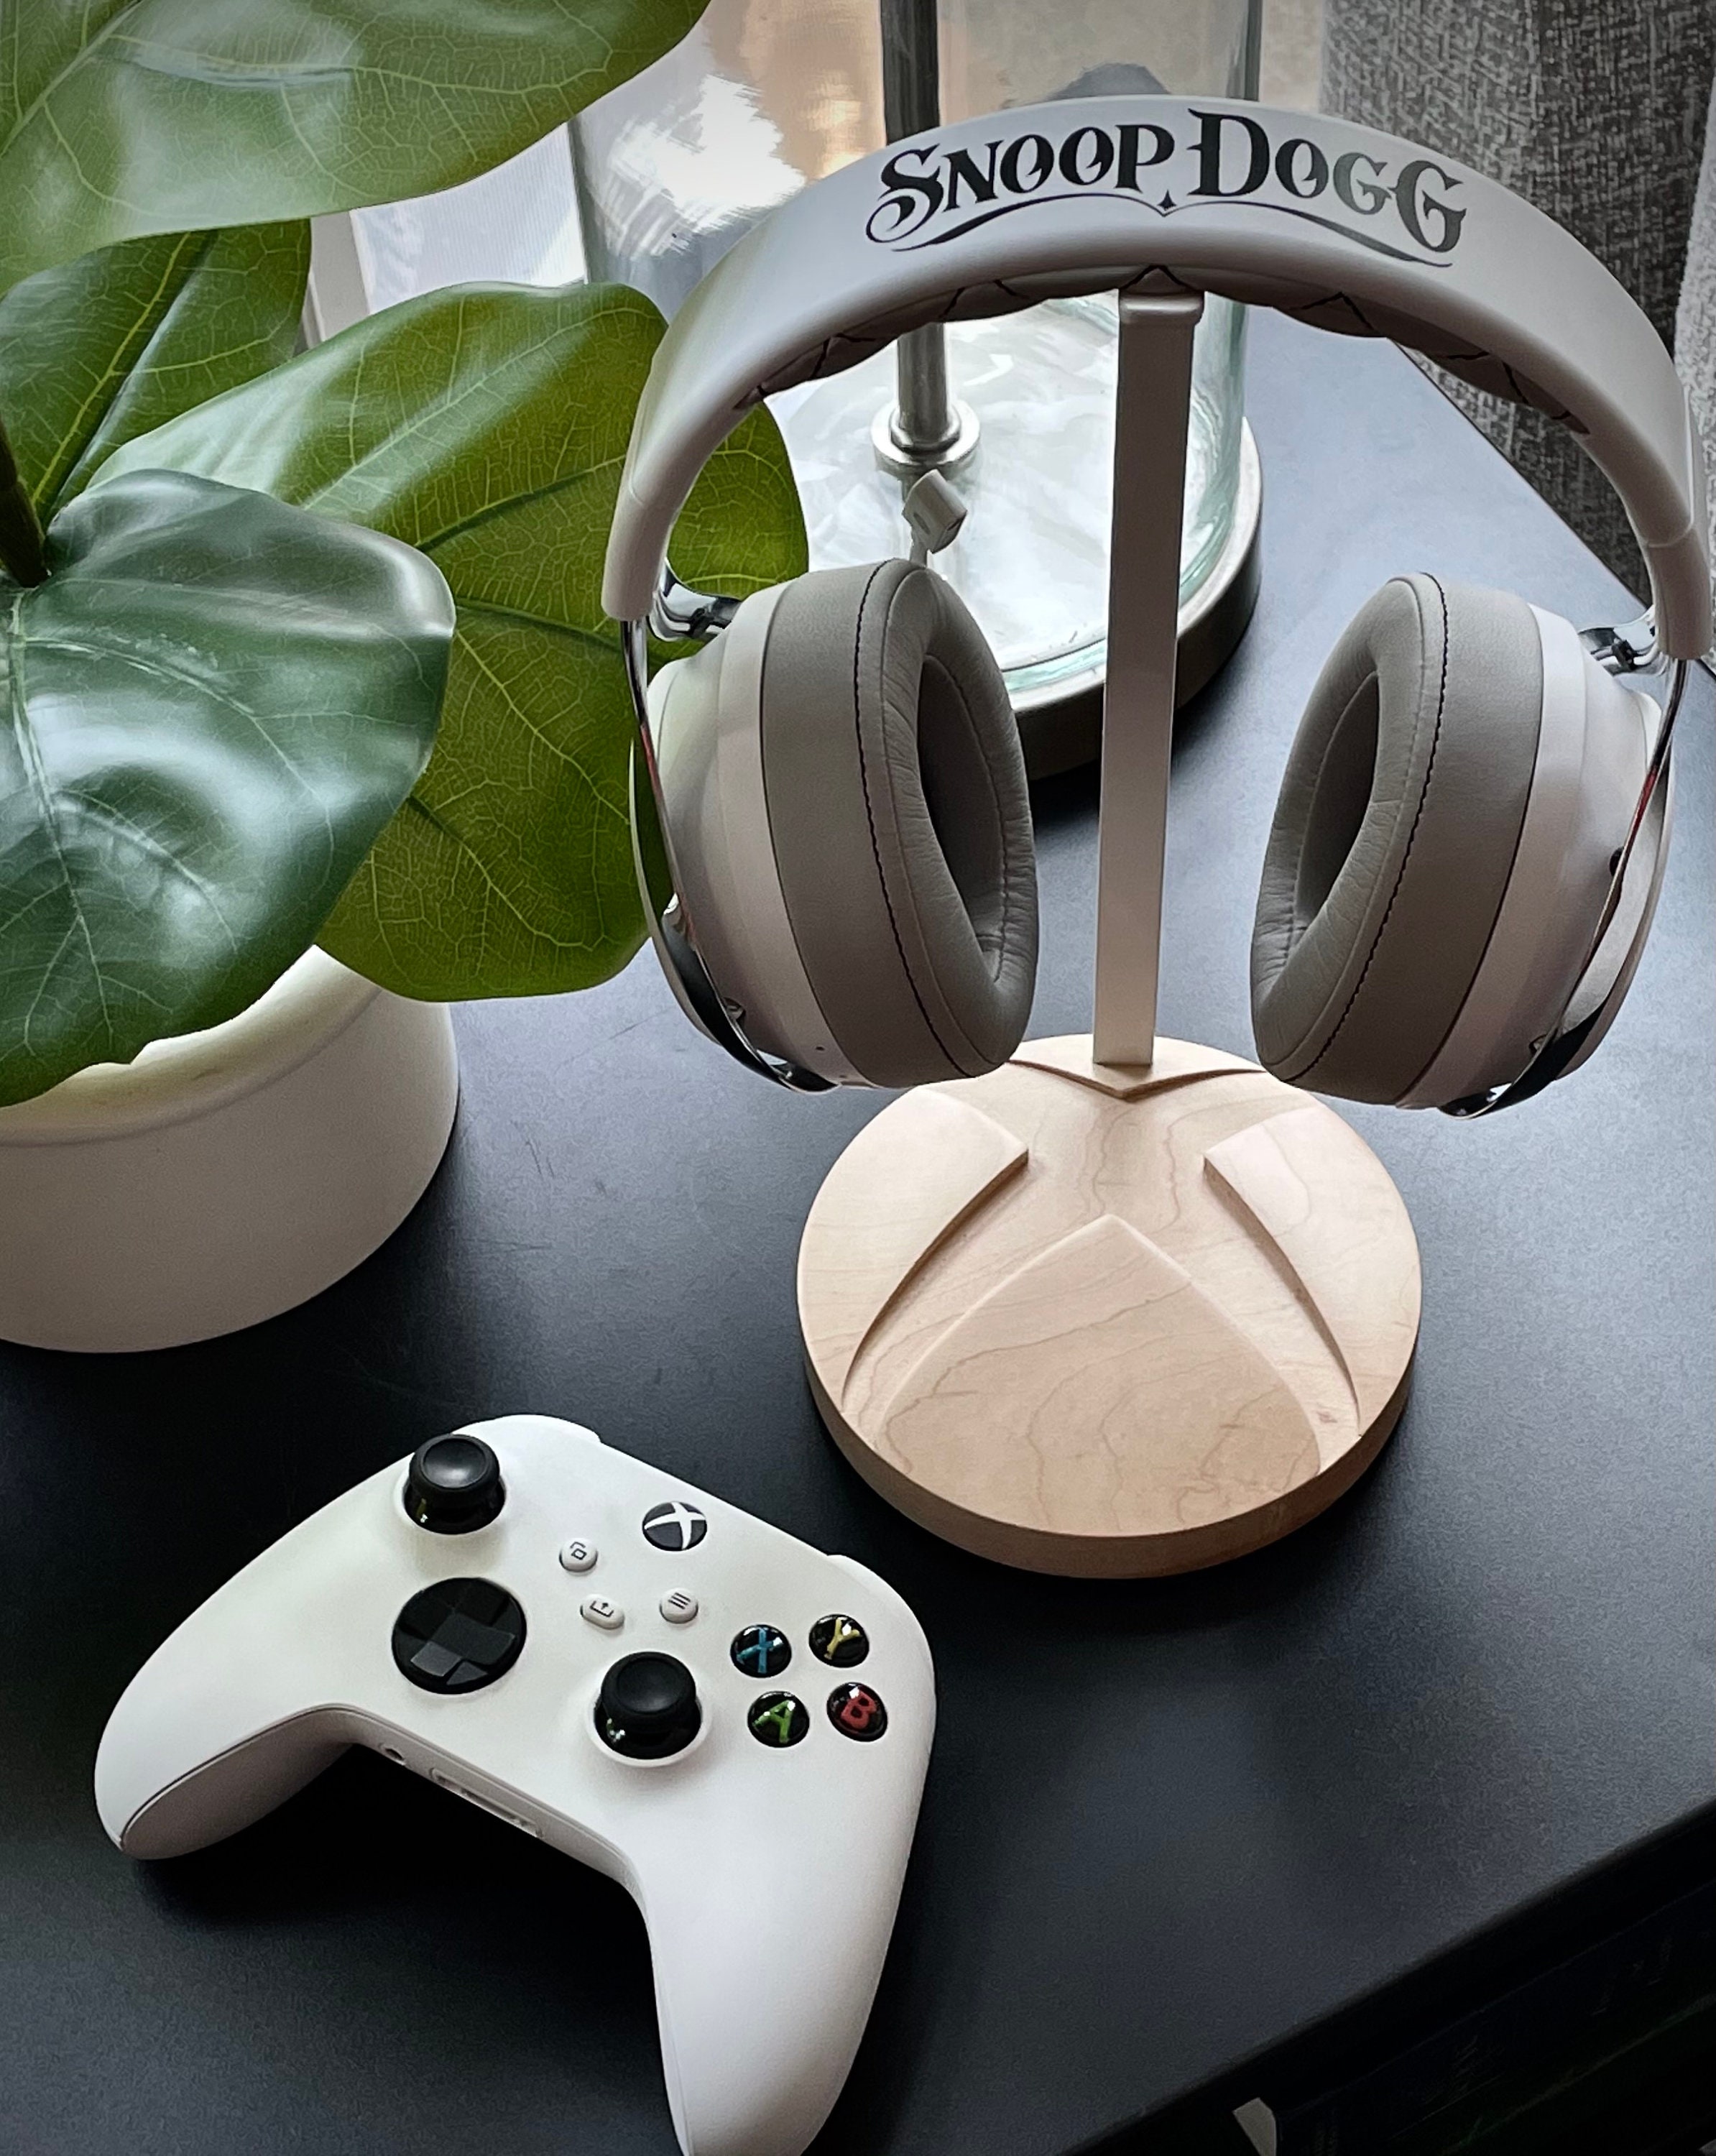 Custom Wood Headphone Stand Headphone Holder for Gaming Headset